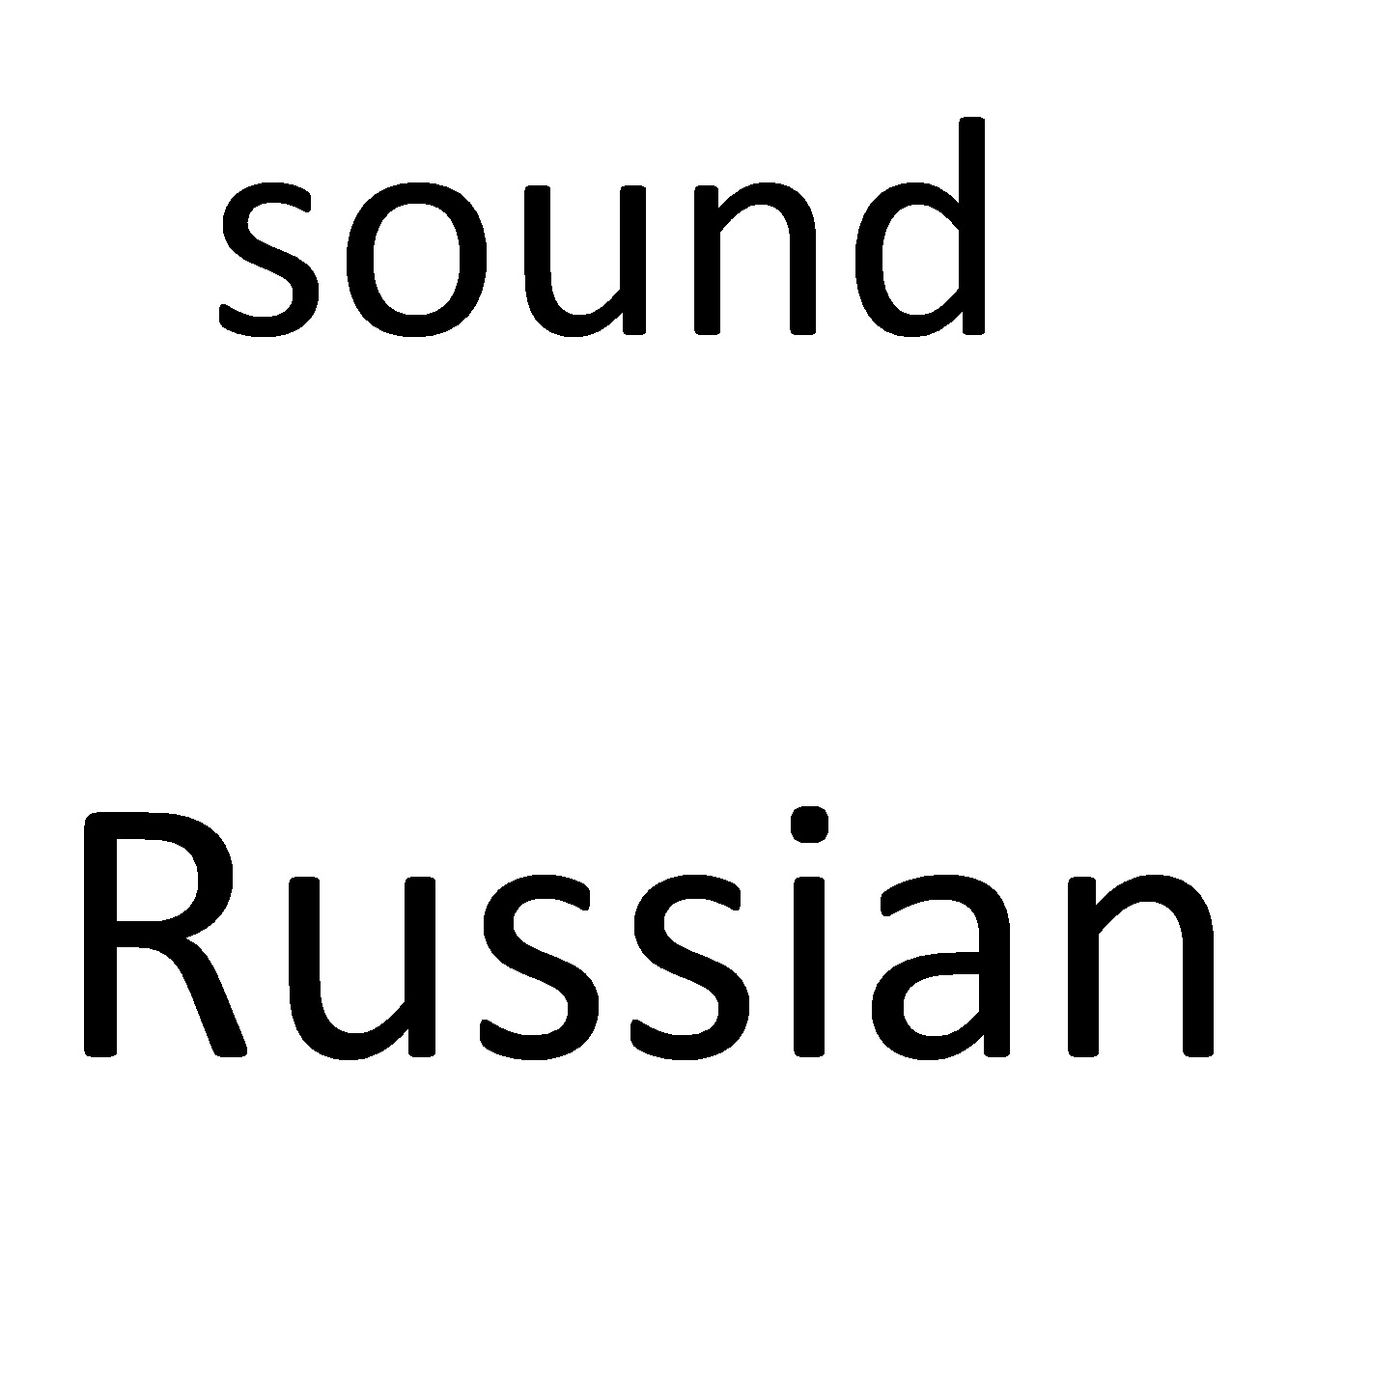 soundRussian